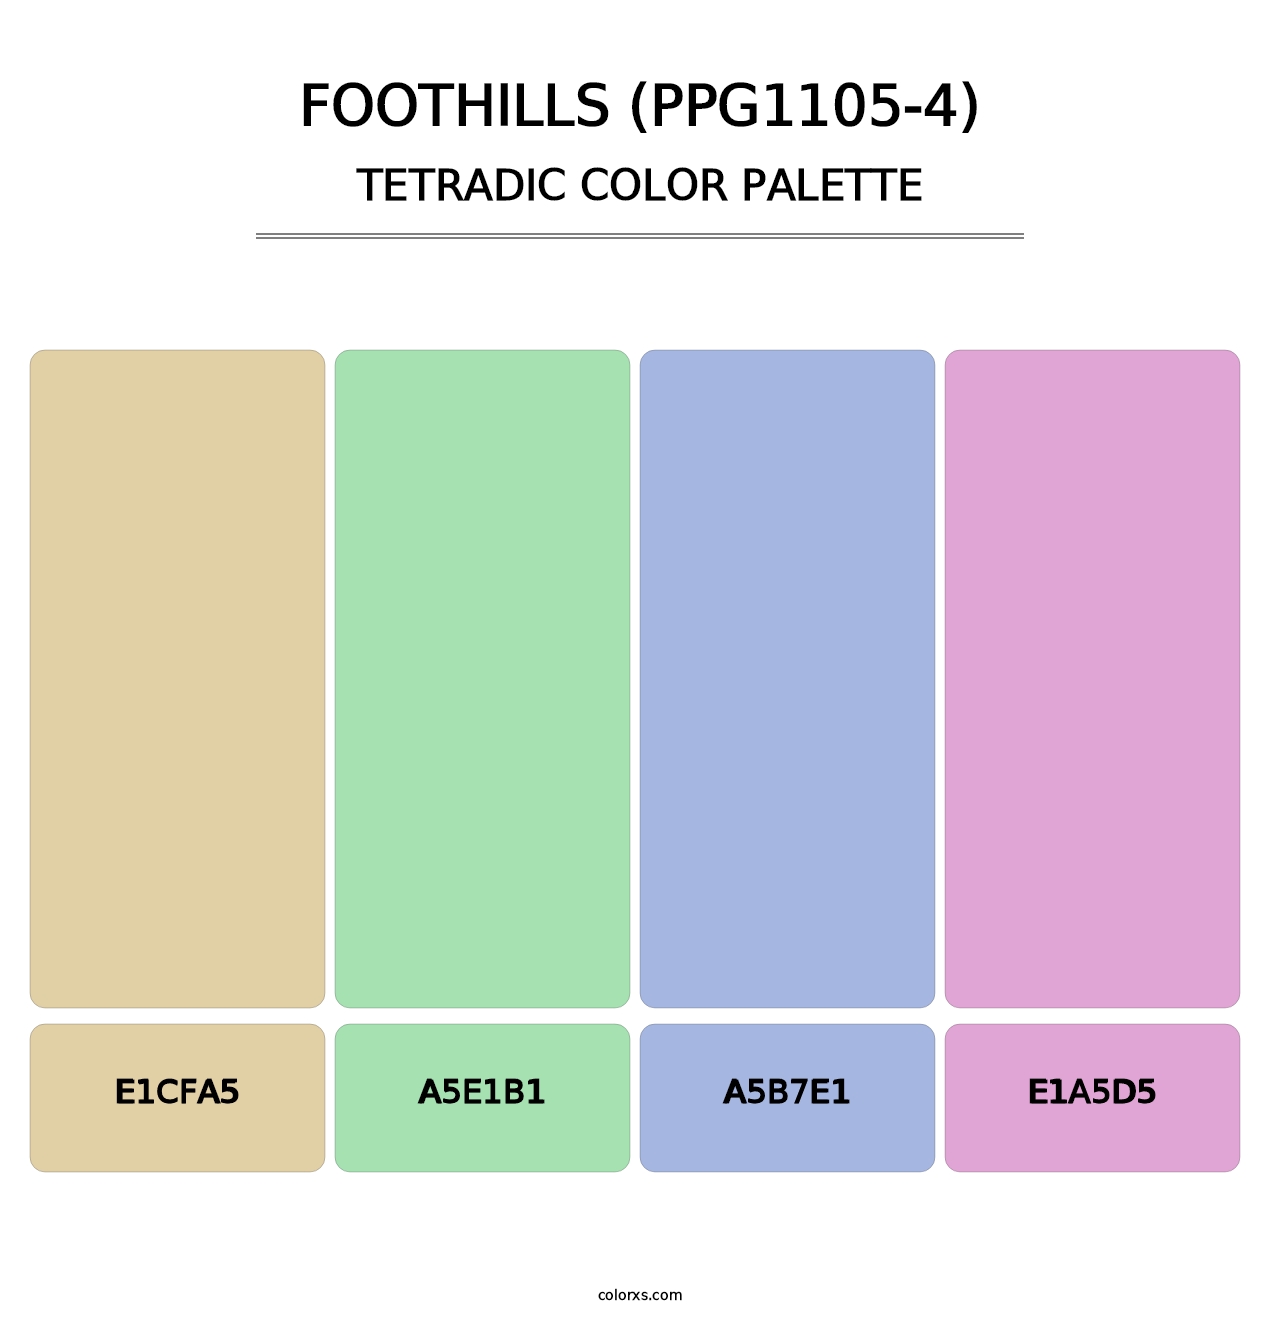 Foothills (PPG1105-4) - Tetradic Color Palette